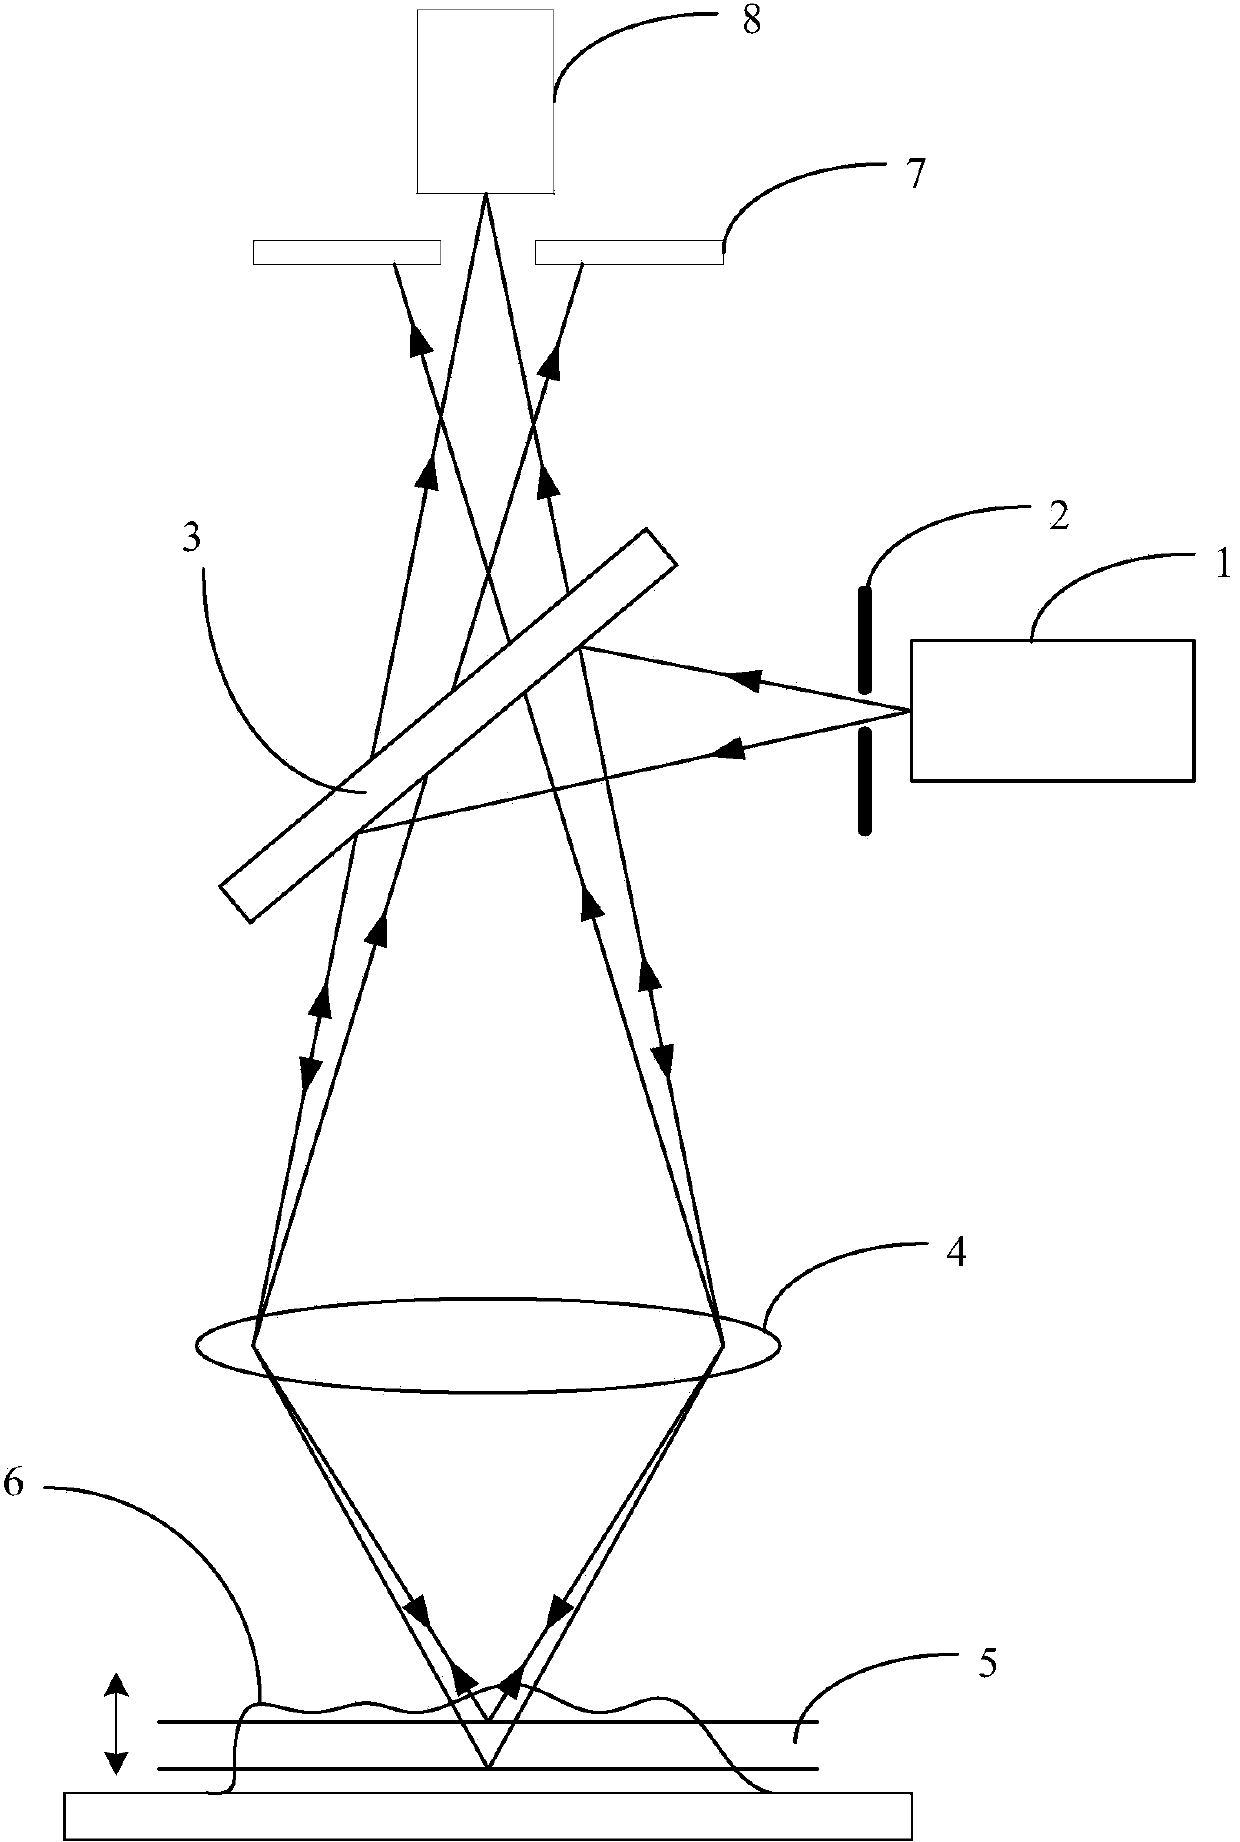 Super-resolution confocal microimaging method and device based on column polarization vortex beam